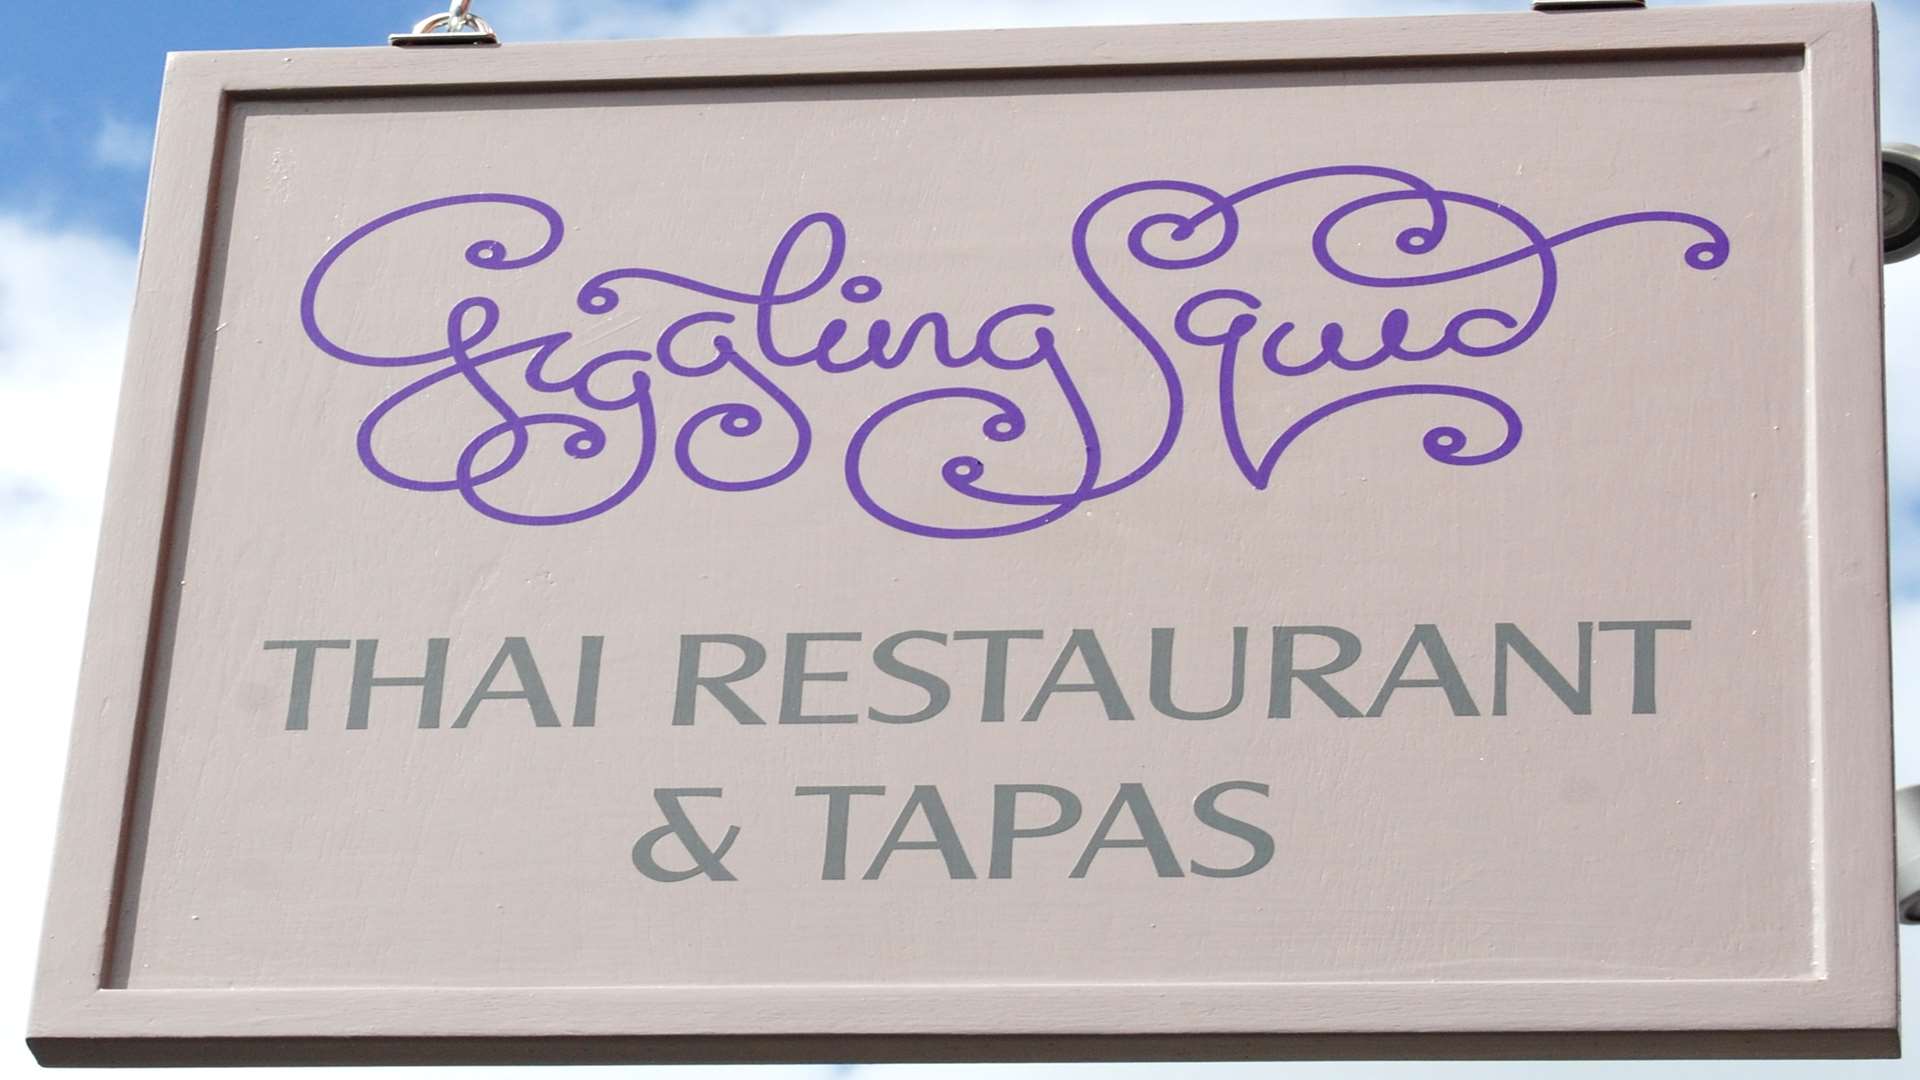 The Giggling Squid restaurant has chains in Sevenoaks and Tunbridge Wells